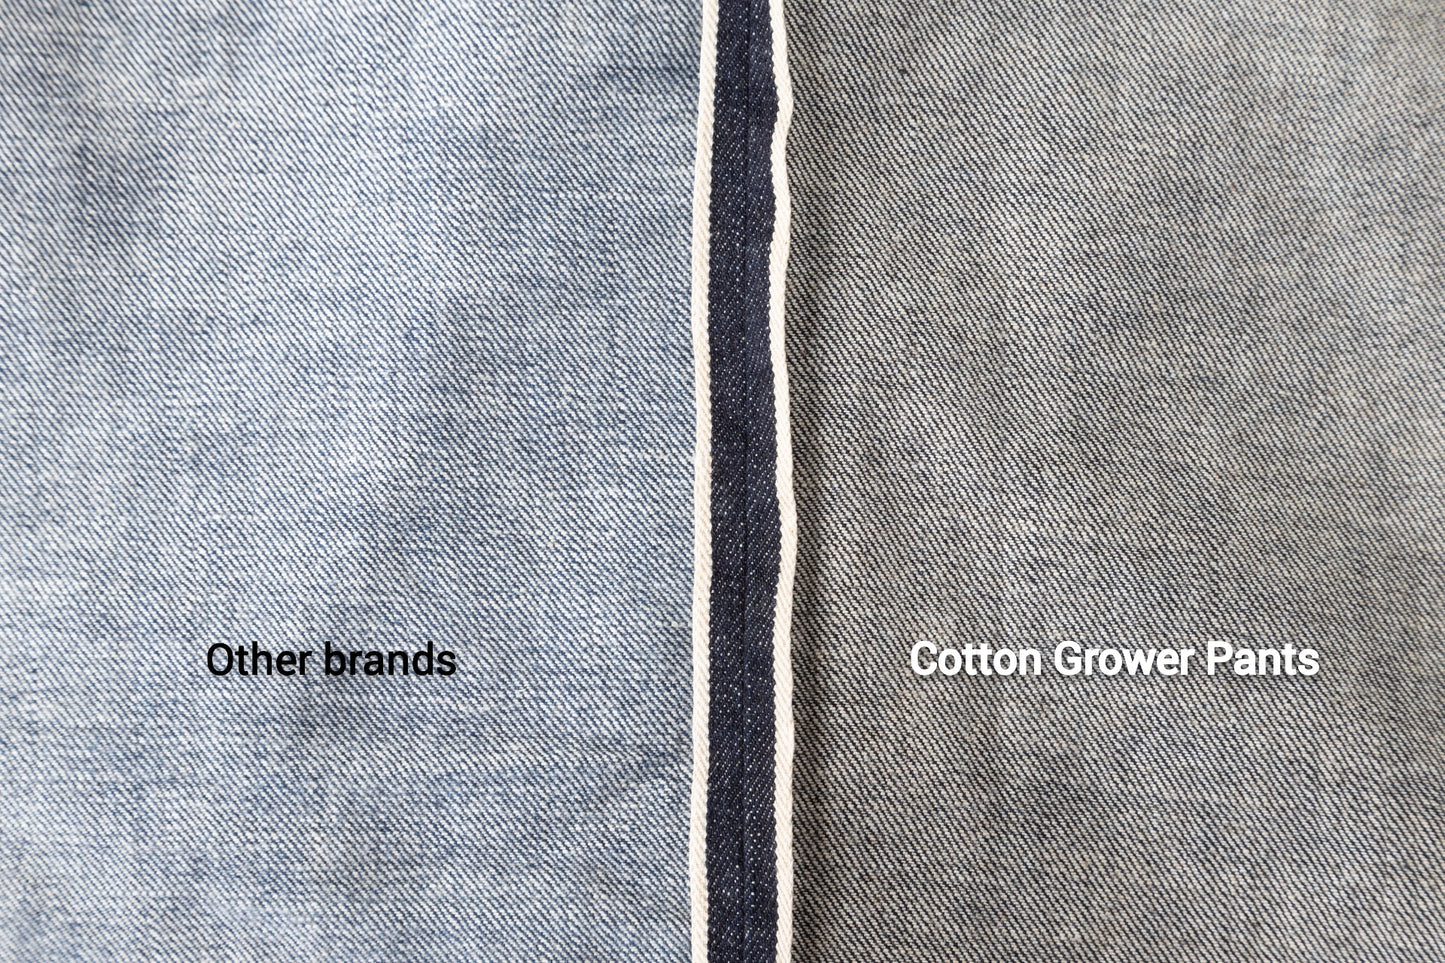 Cotton Grower Pants